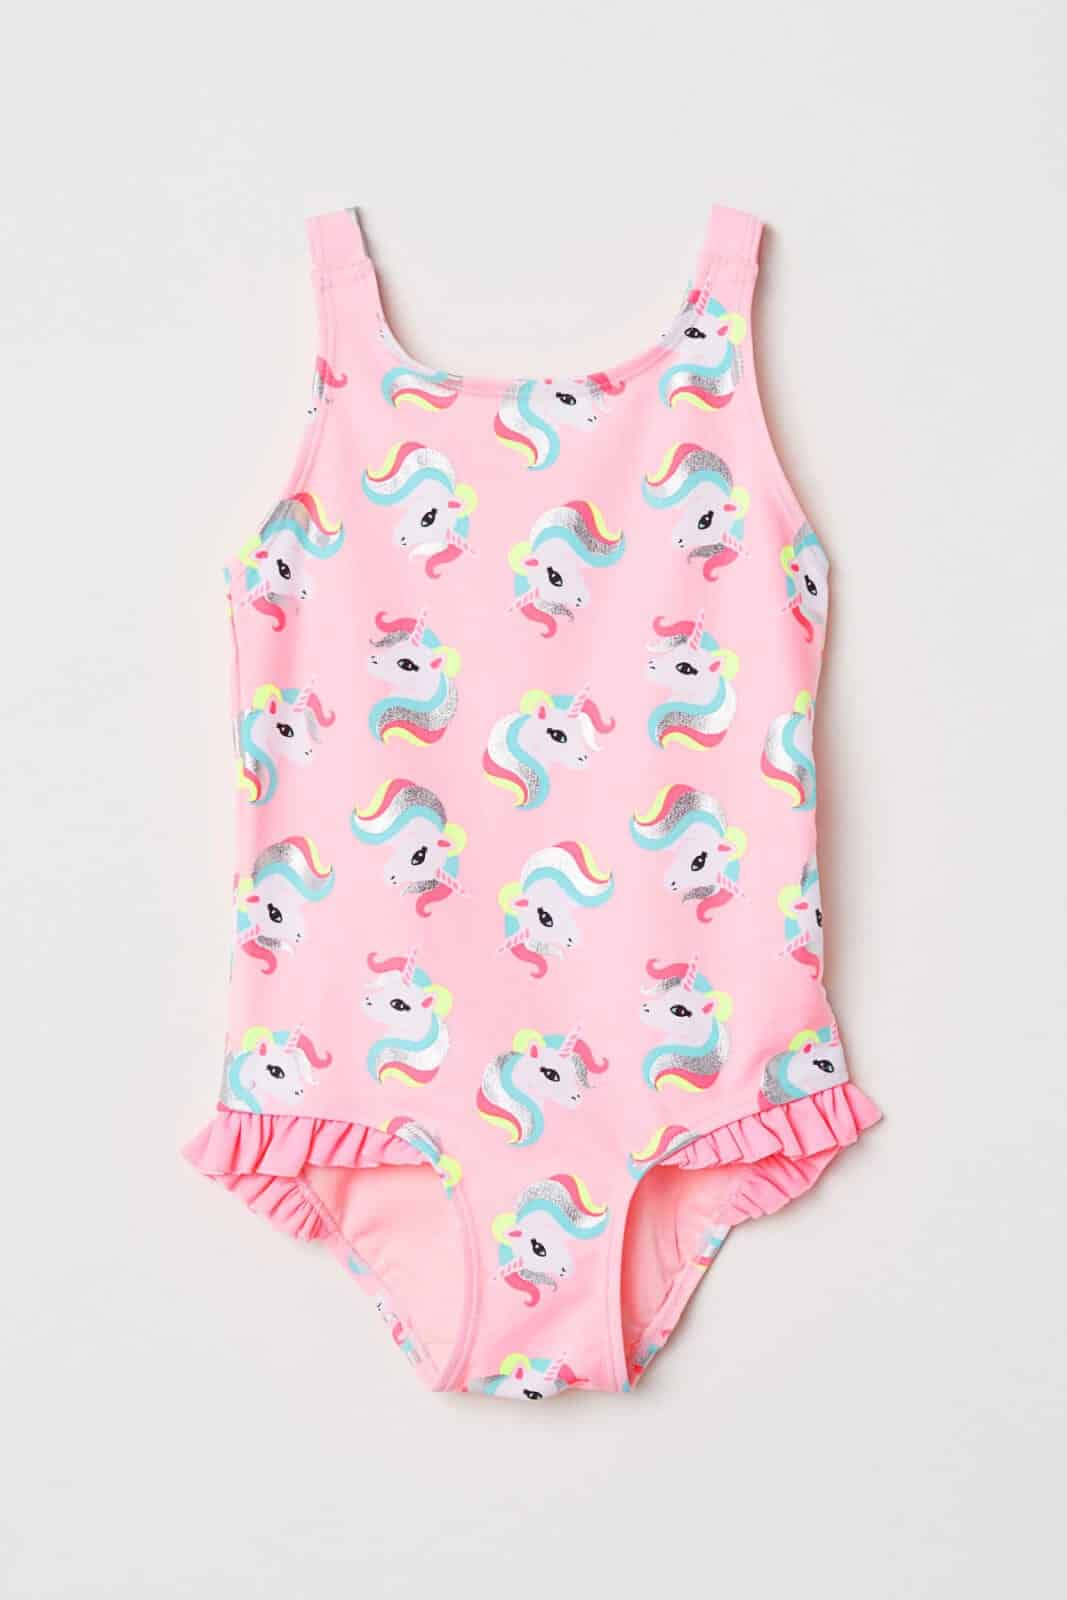 Lito Angels Girls Unicorn Swimsuit Bathing Suit Poolside Swimwear Tankini Two Piece Set